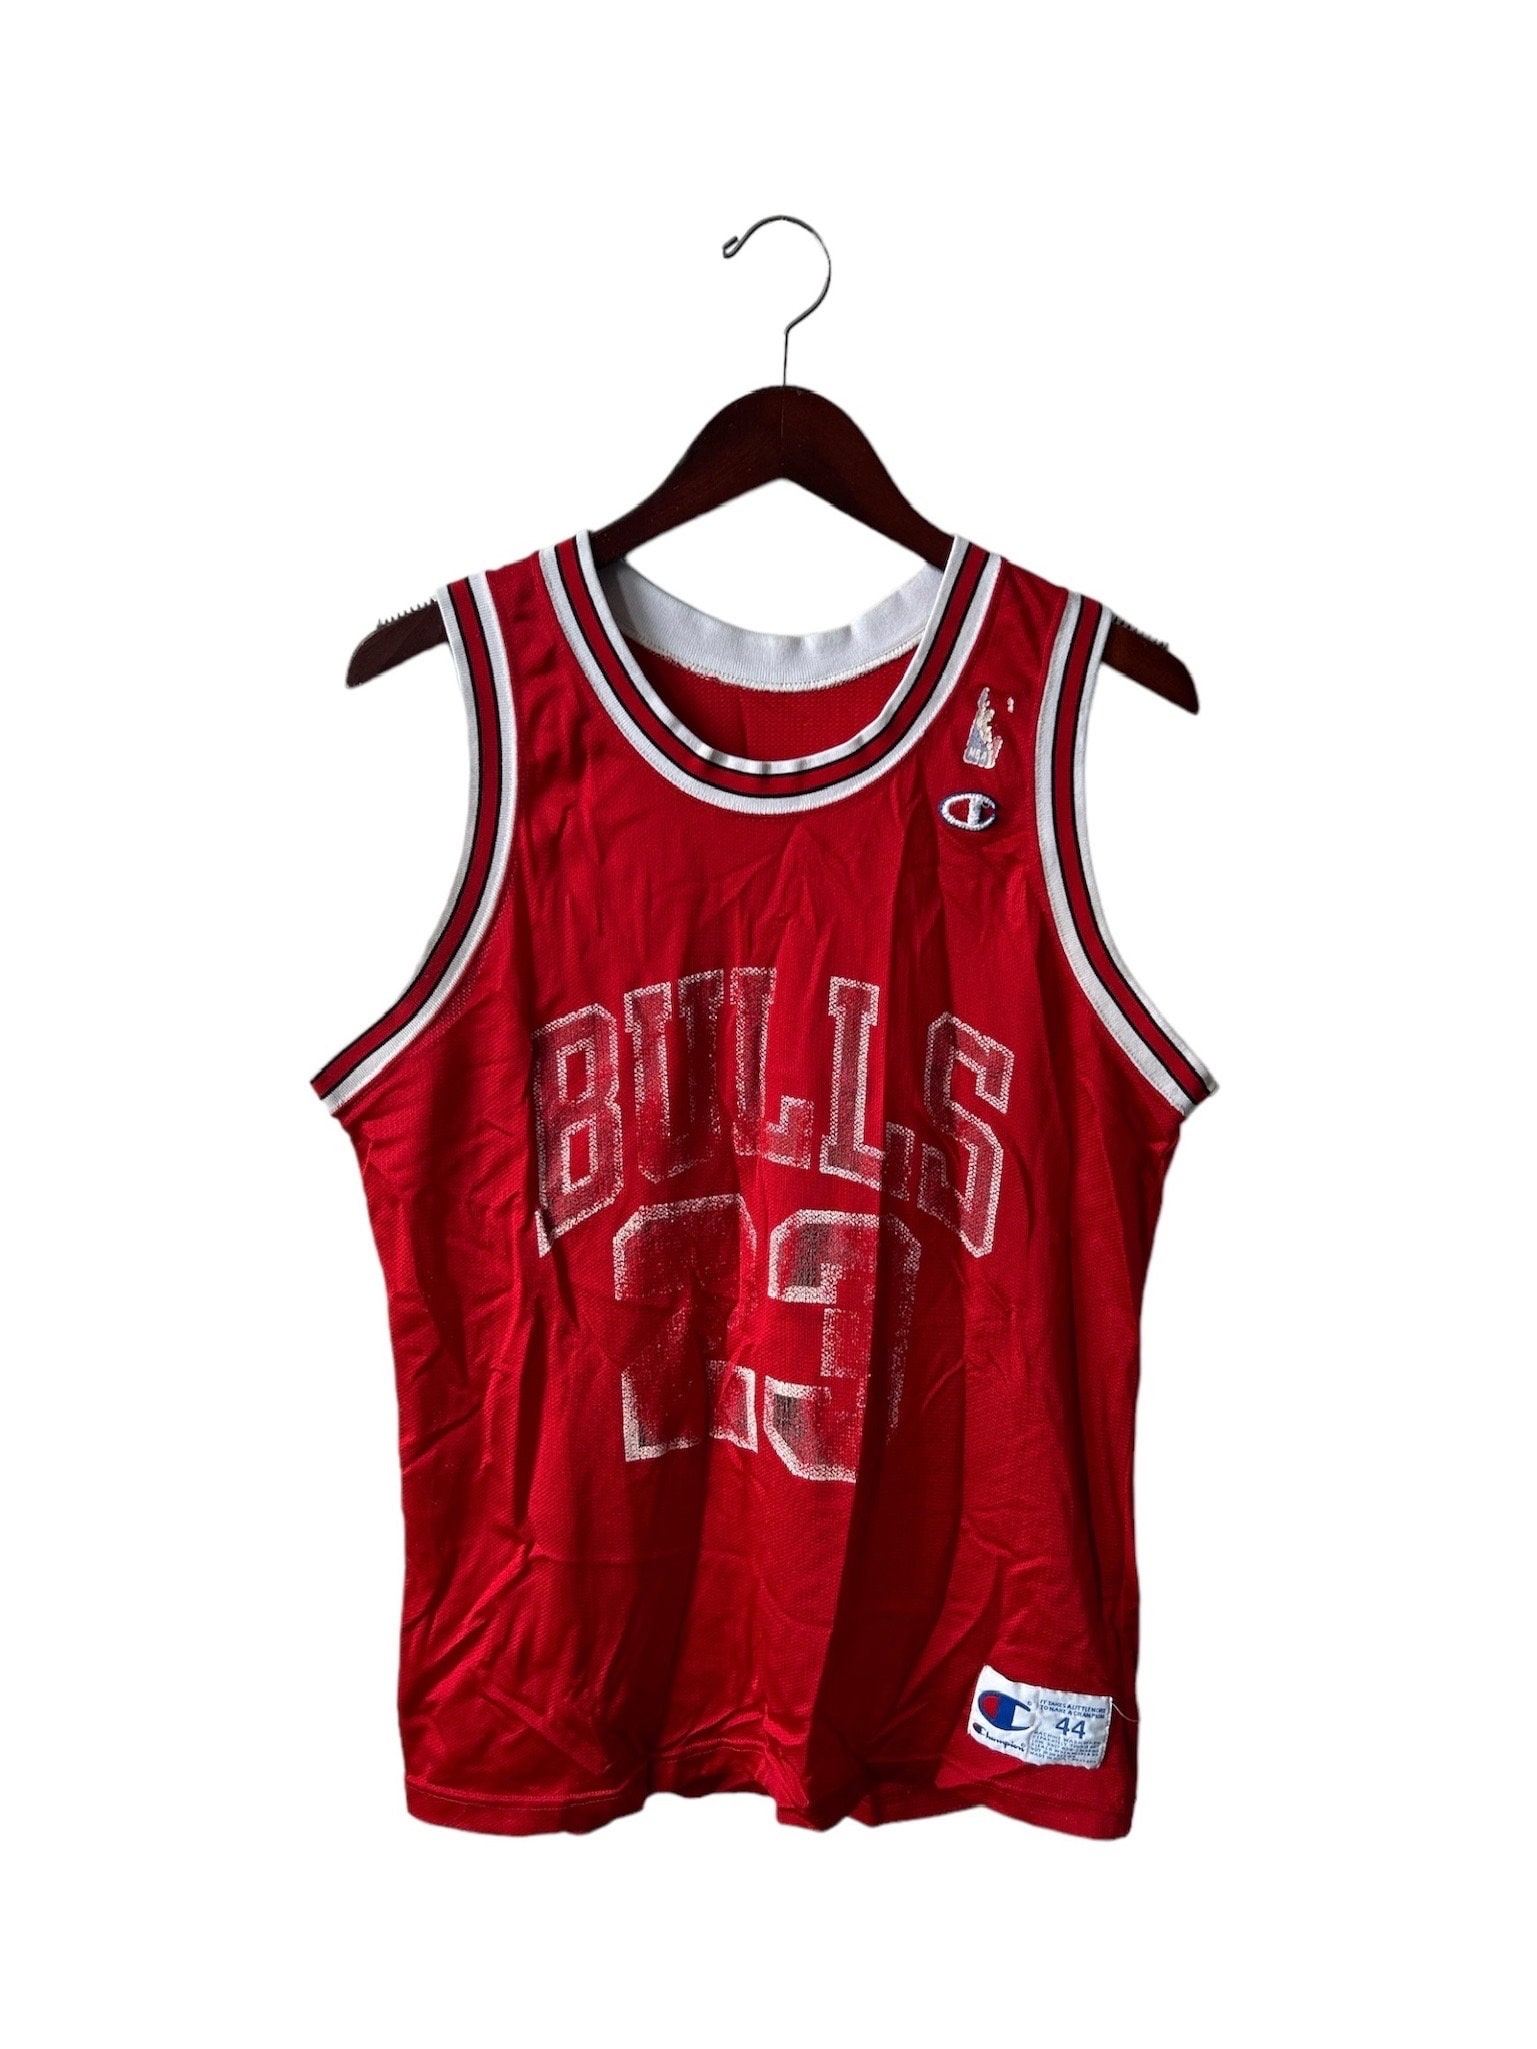 Chicago Bulls unsigned Swingman Adidas Jersey